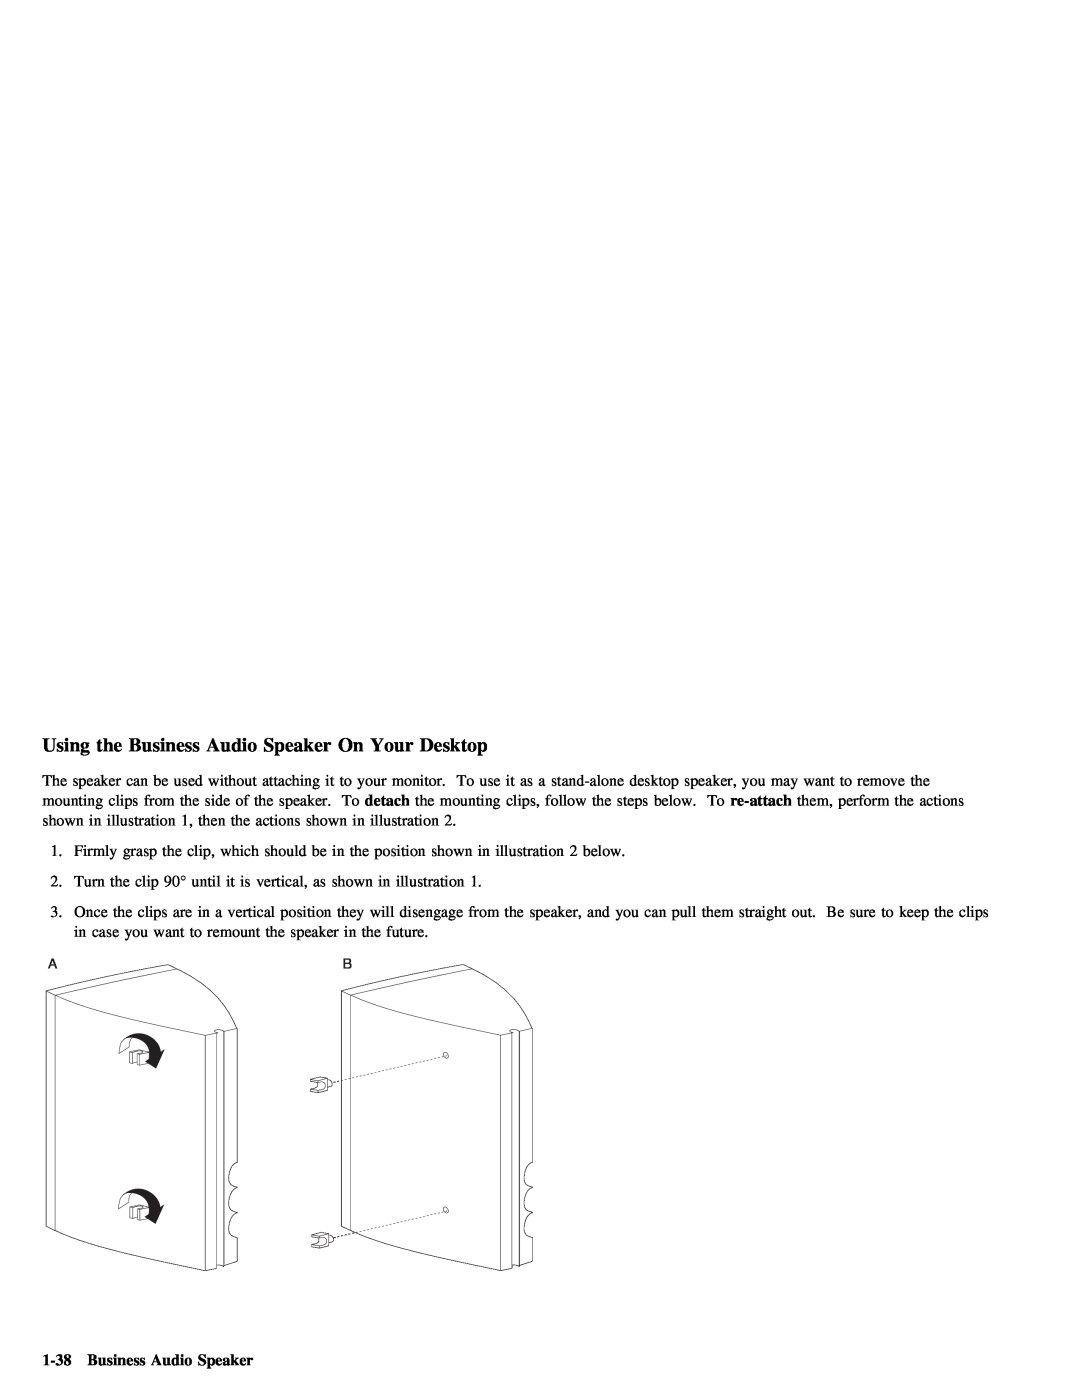 IBM 05L1596 manual 1-38Business Audio Speaker, Your, Using 